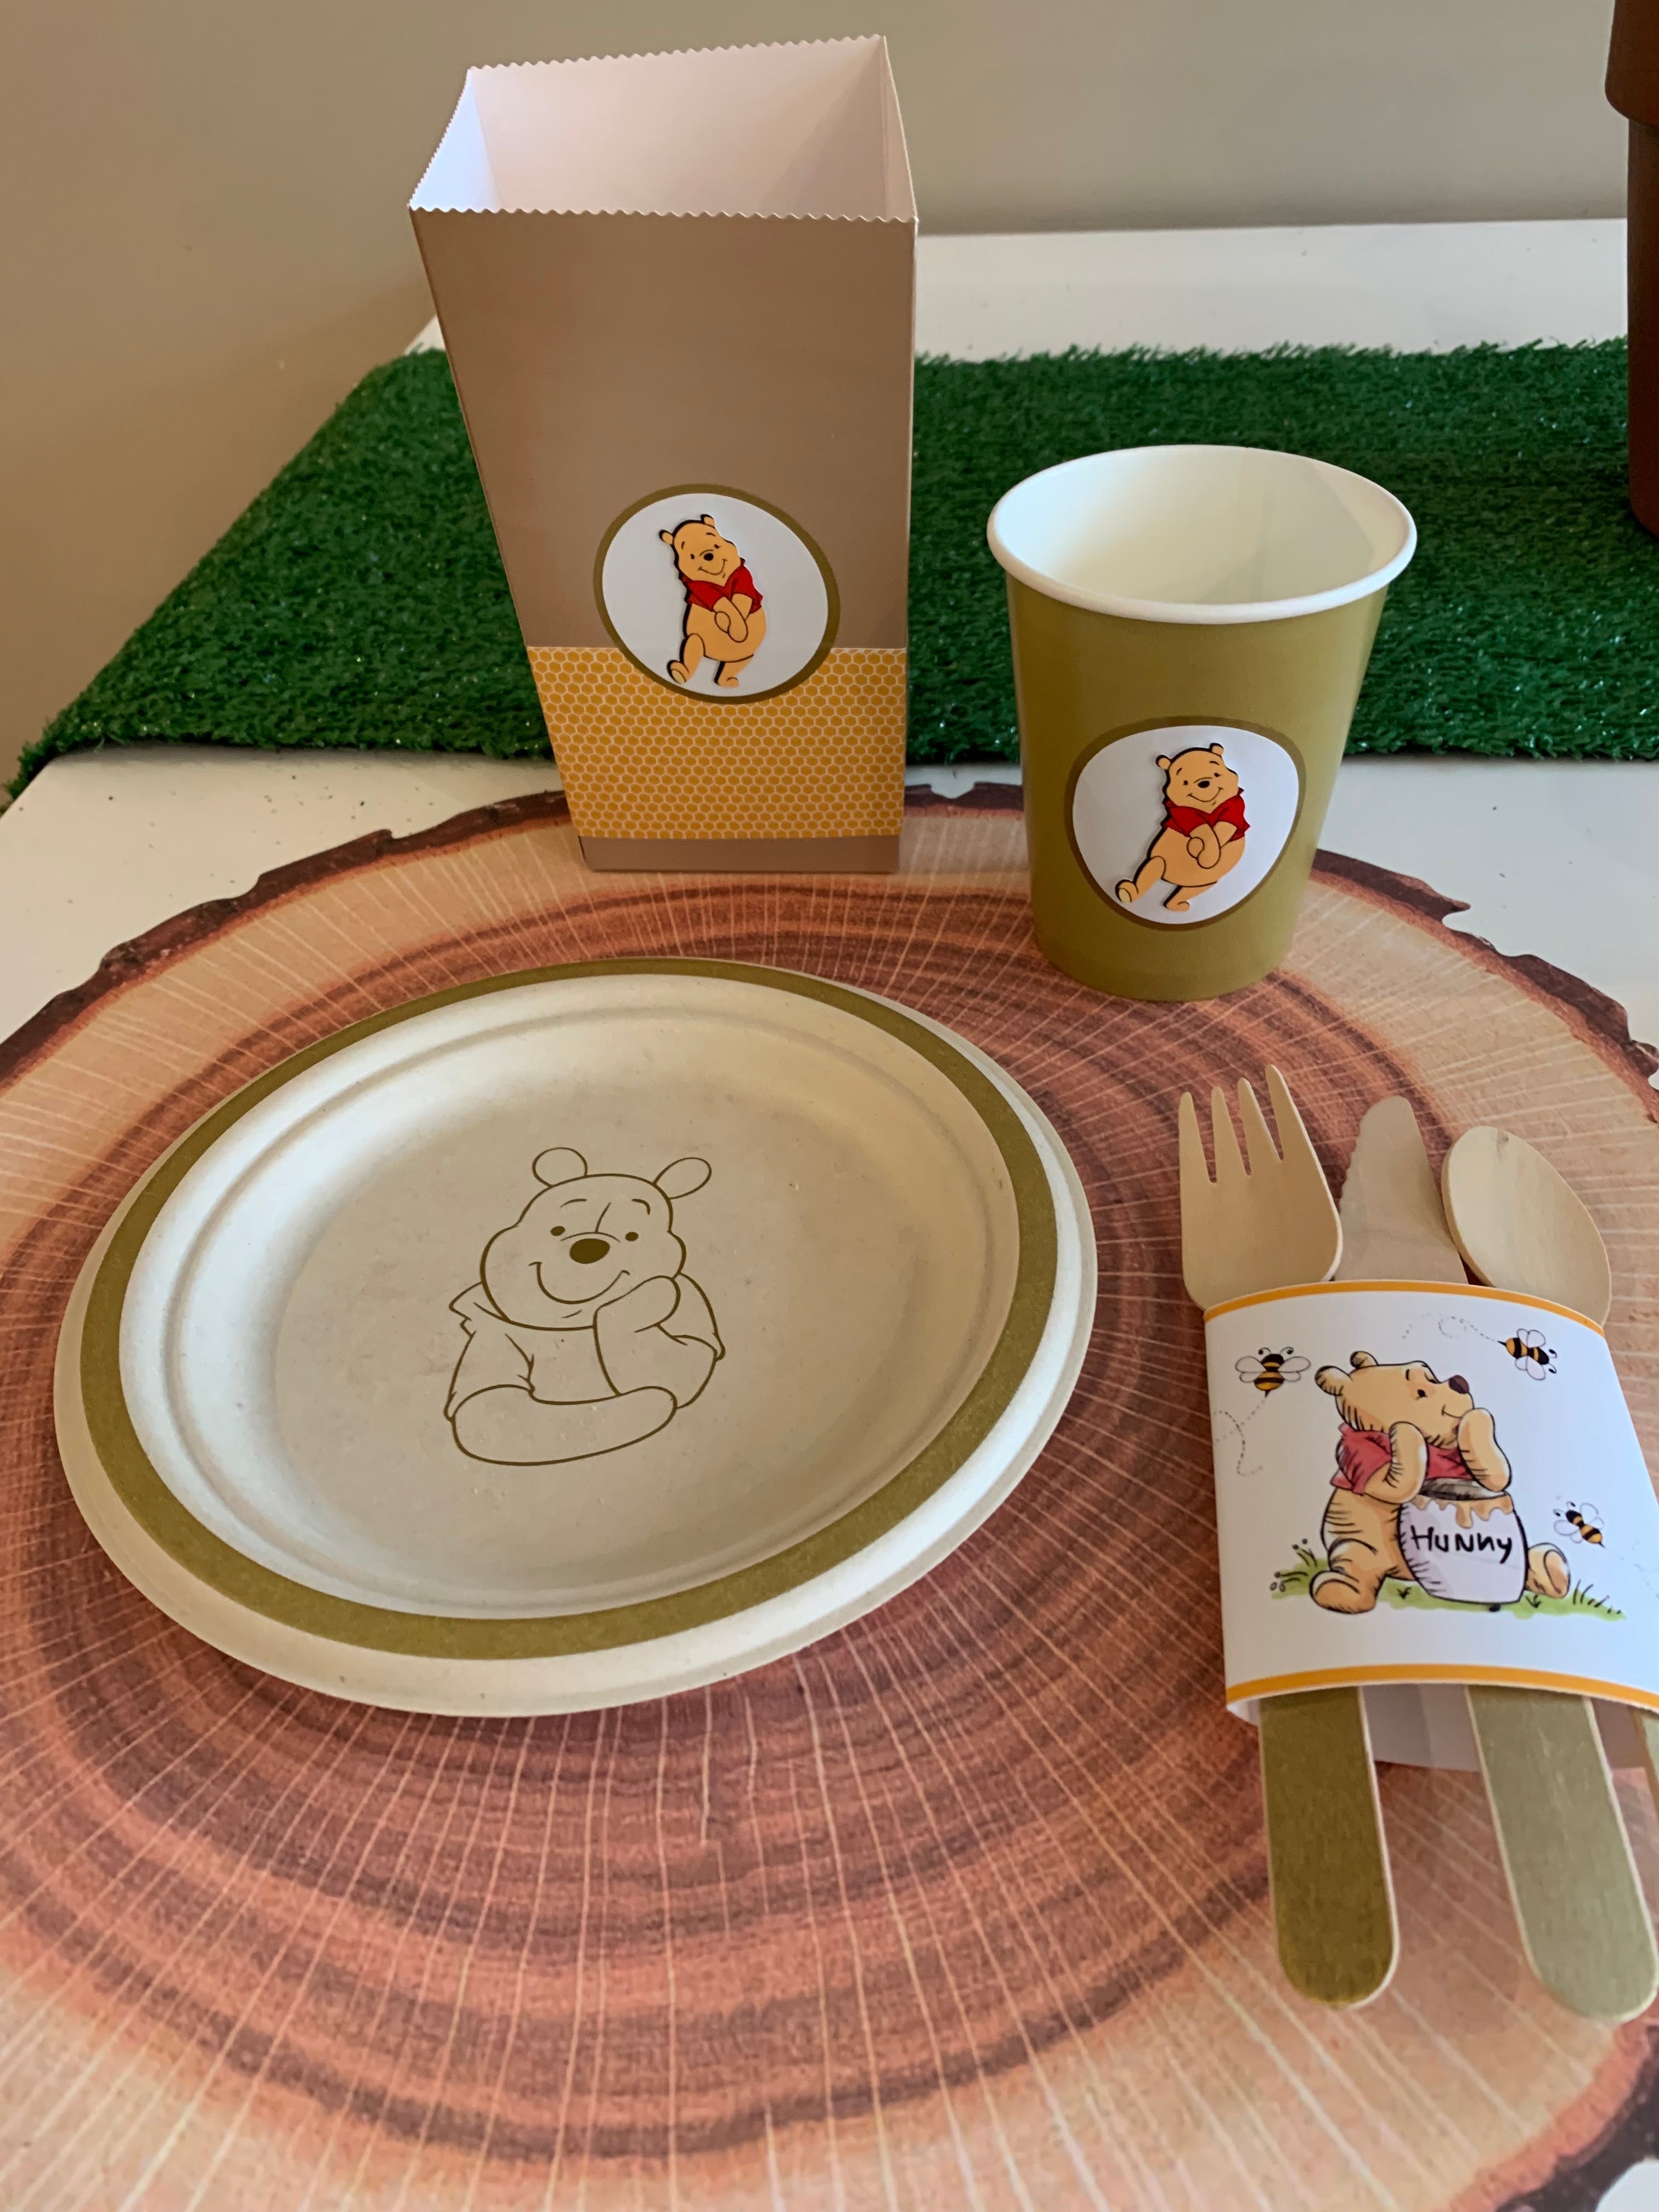 Winnie the pooh themed tableware